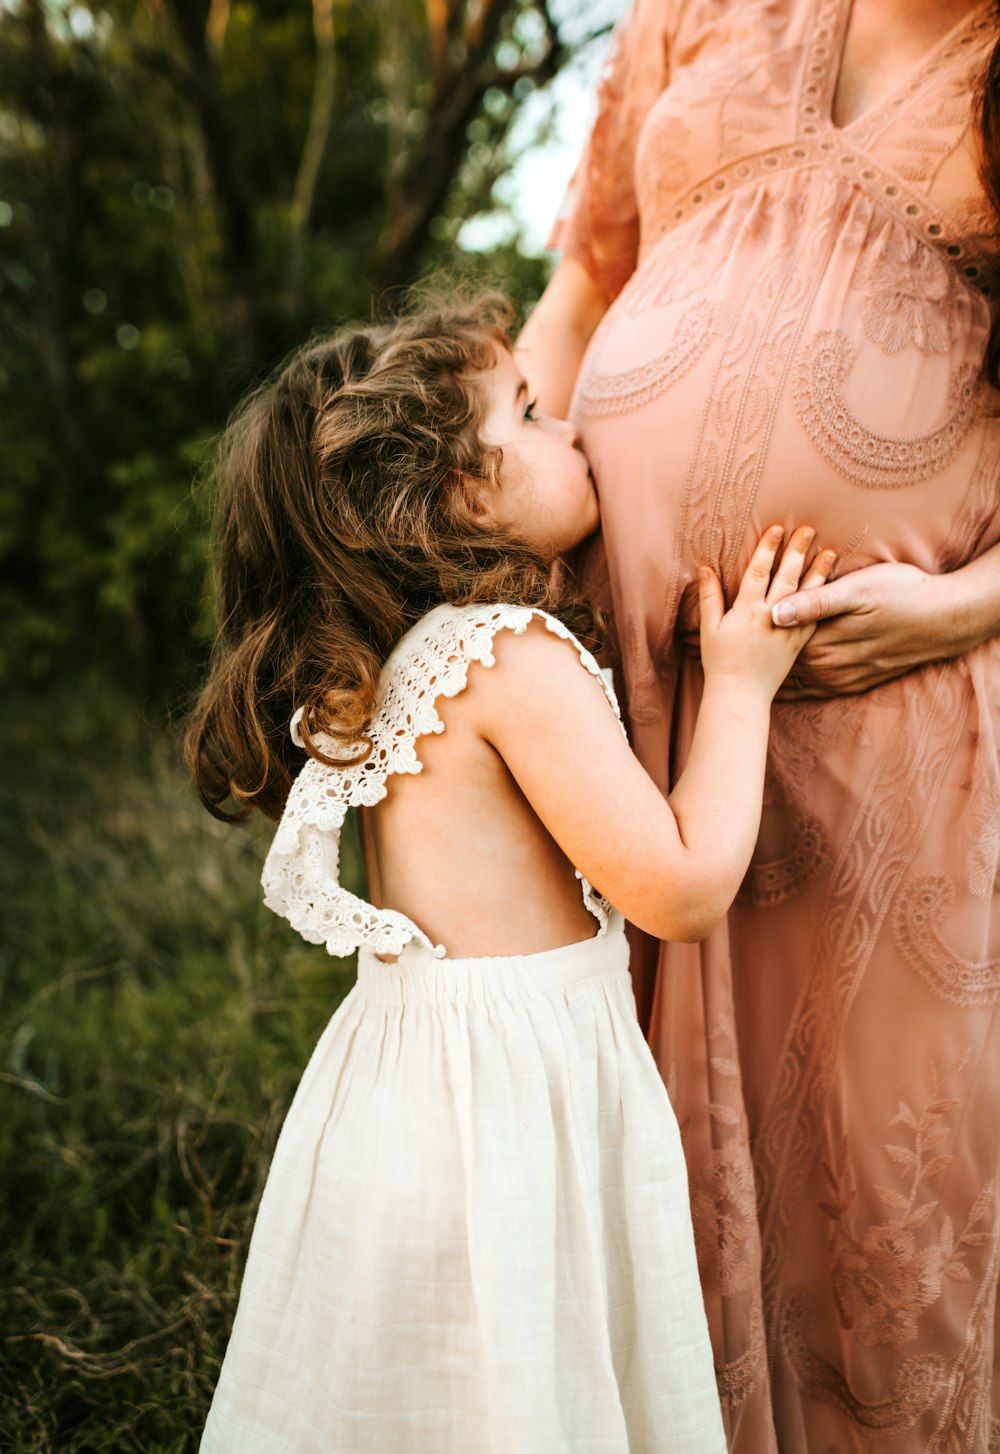 child kissing woman's tummy